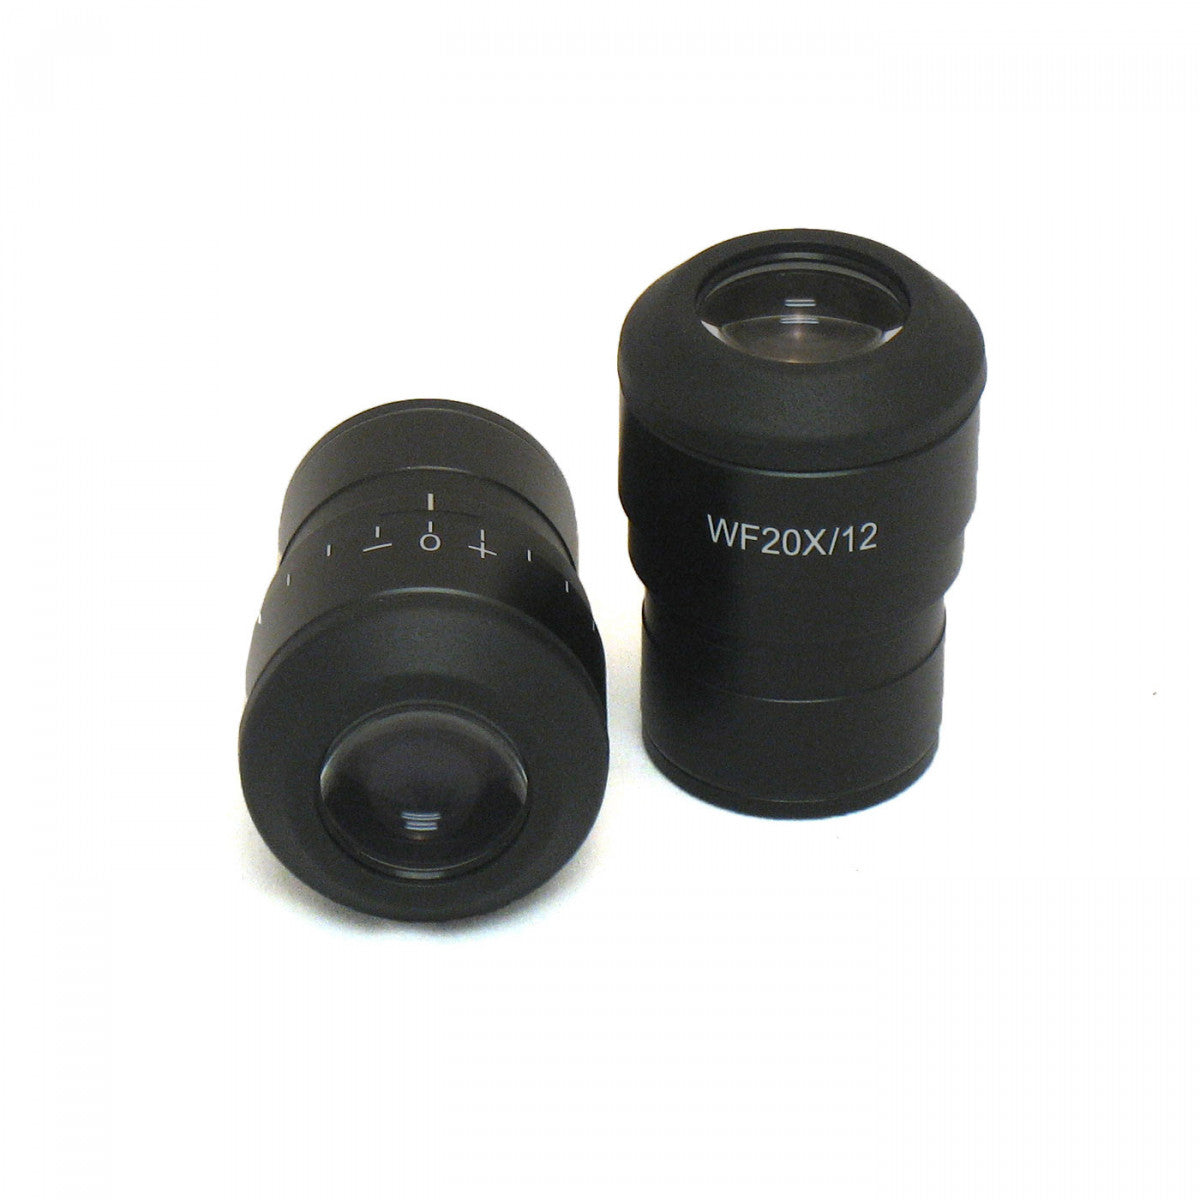 Eyepieces for Accu-Scope 3072 Microscope